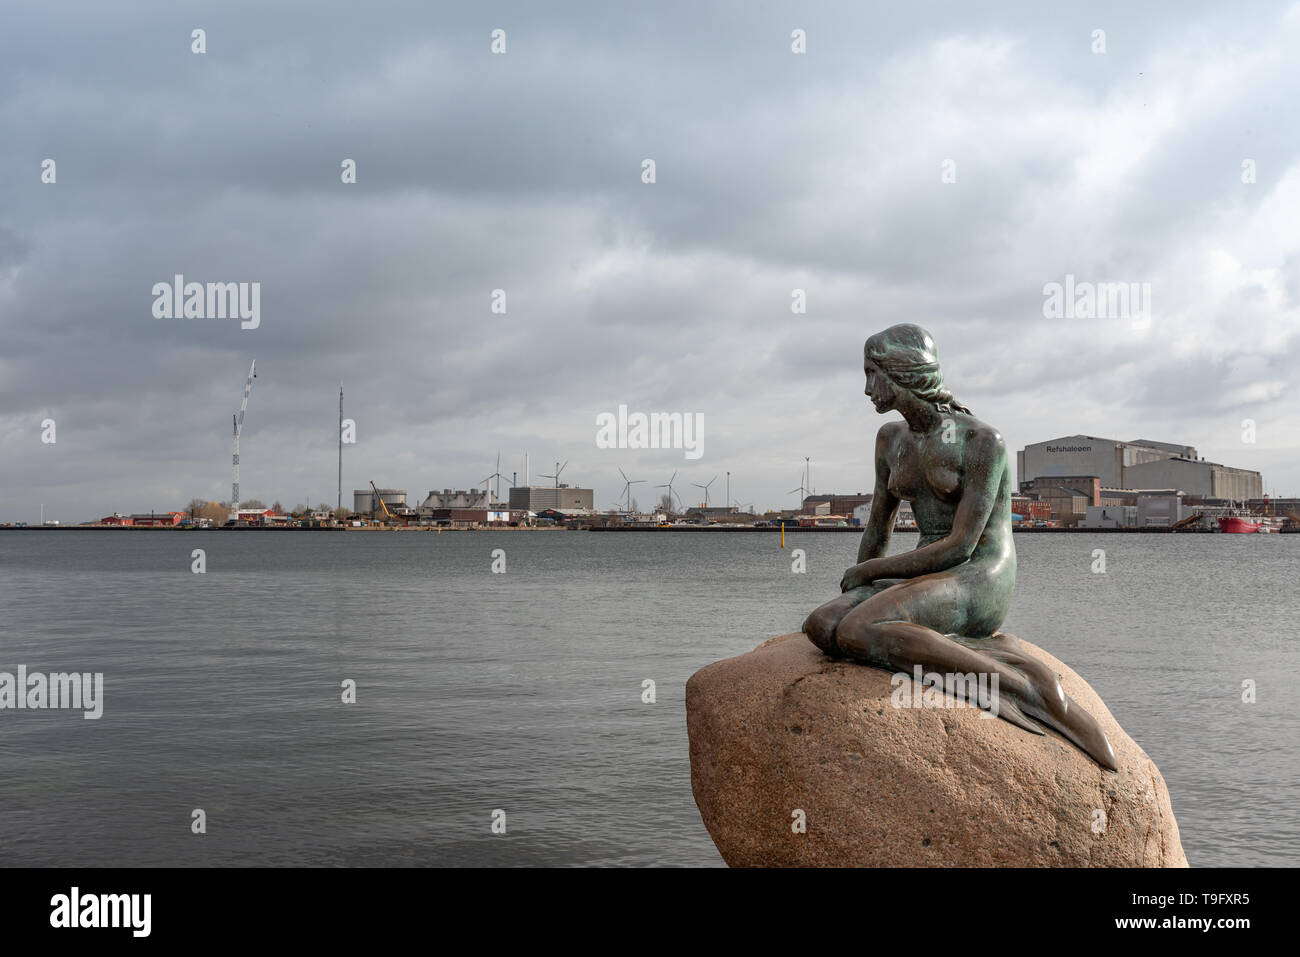 The Little Mermaid is a bronze statue by Edvard Eriksen in Copenhagen ...